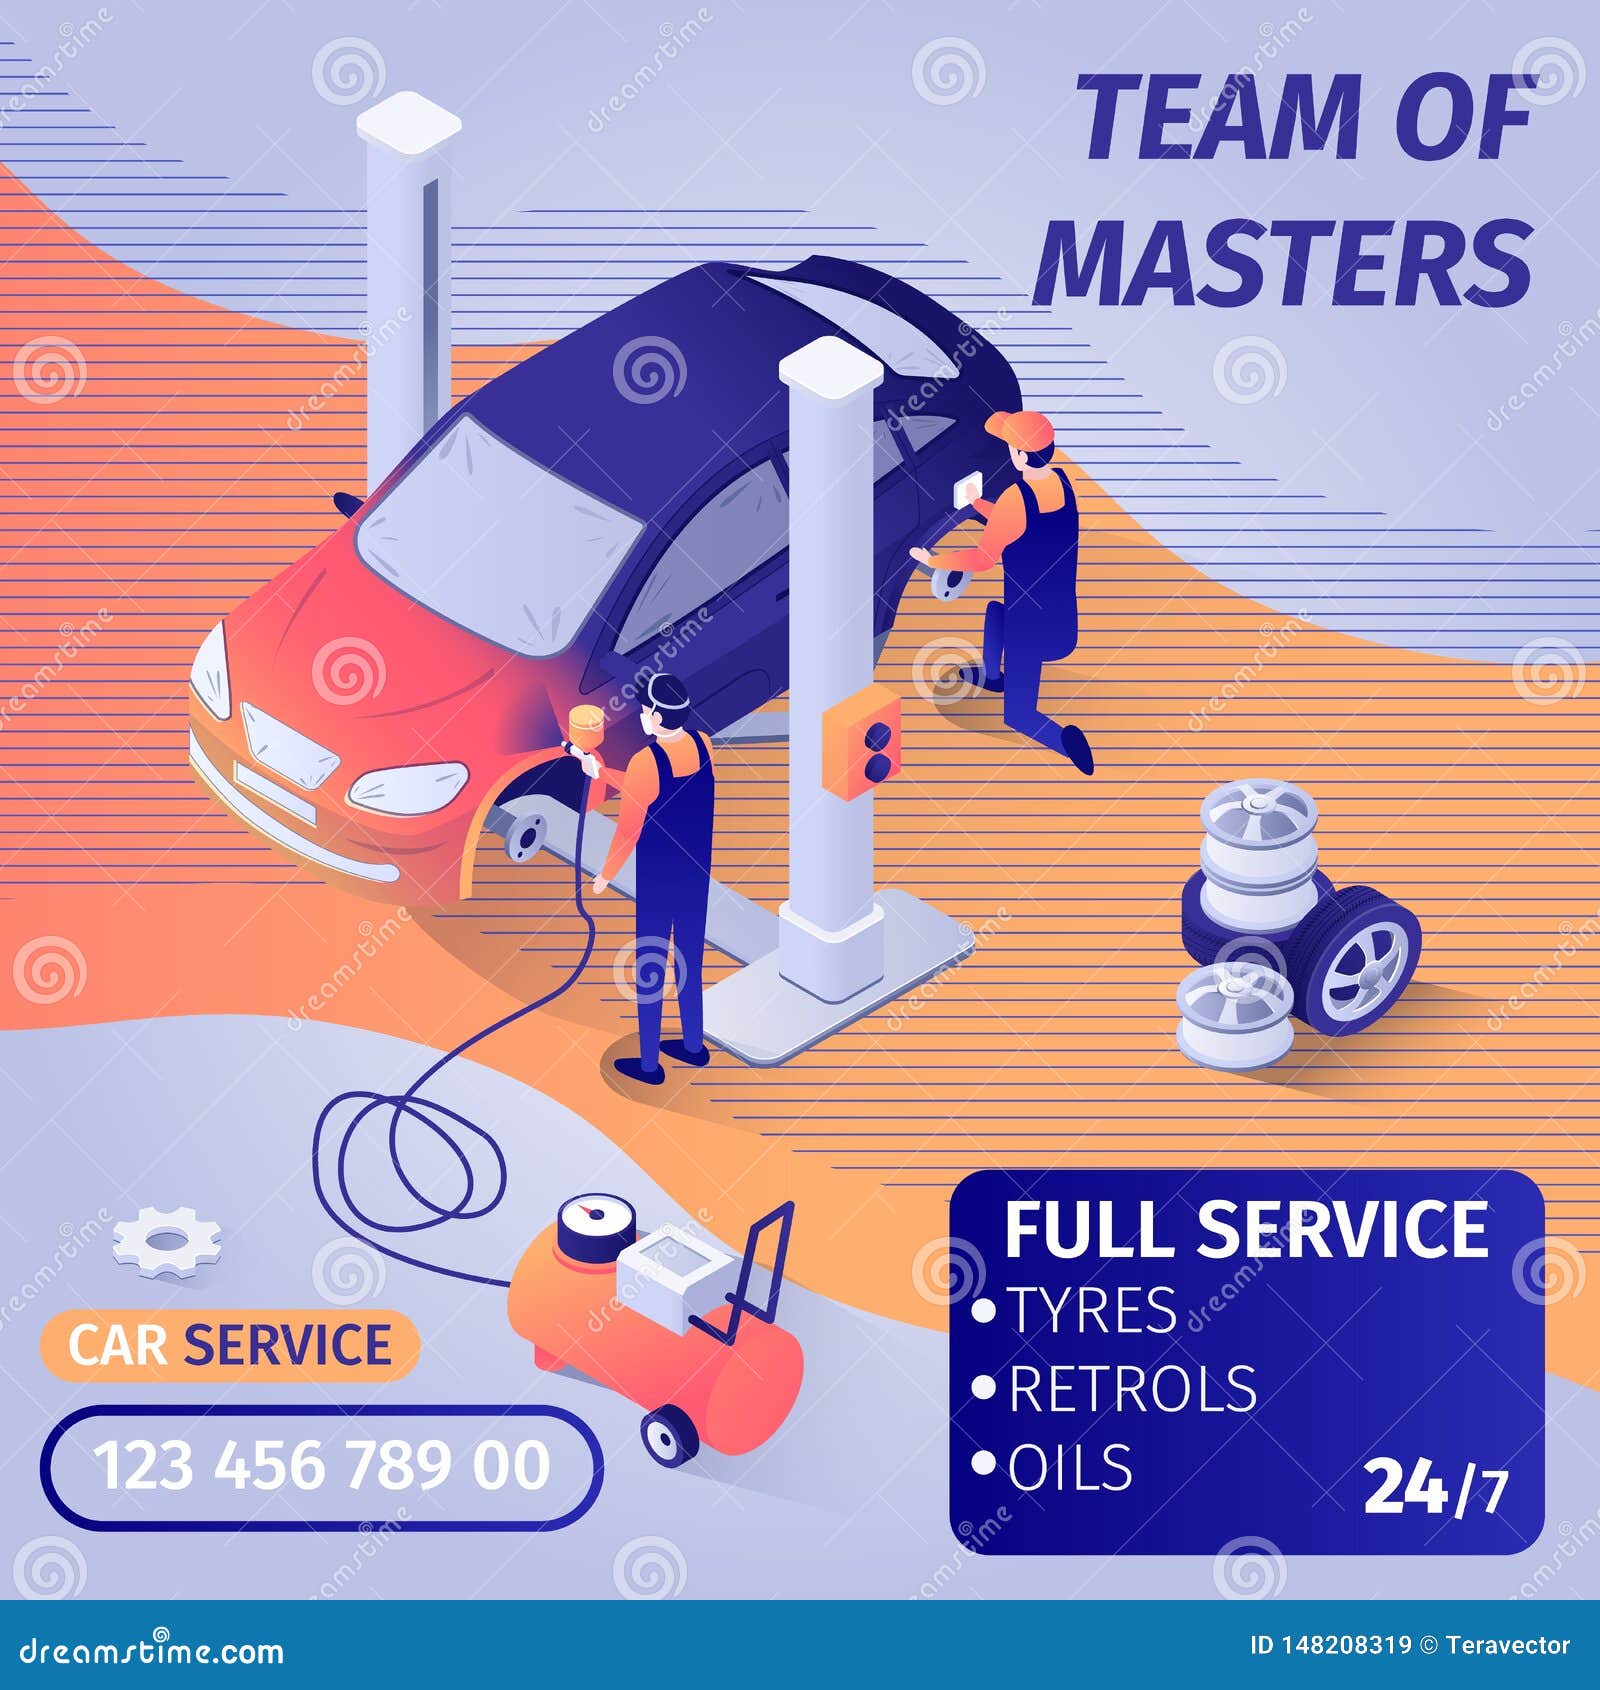 banner advertises skilled teamwork in car service